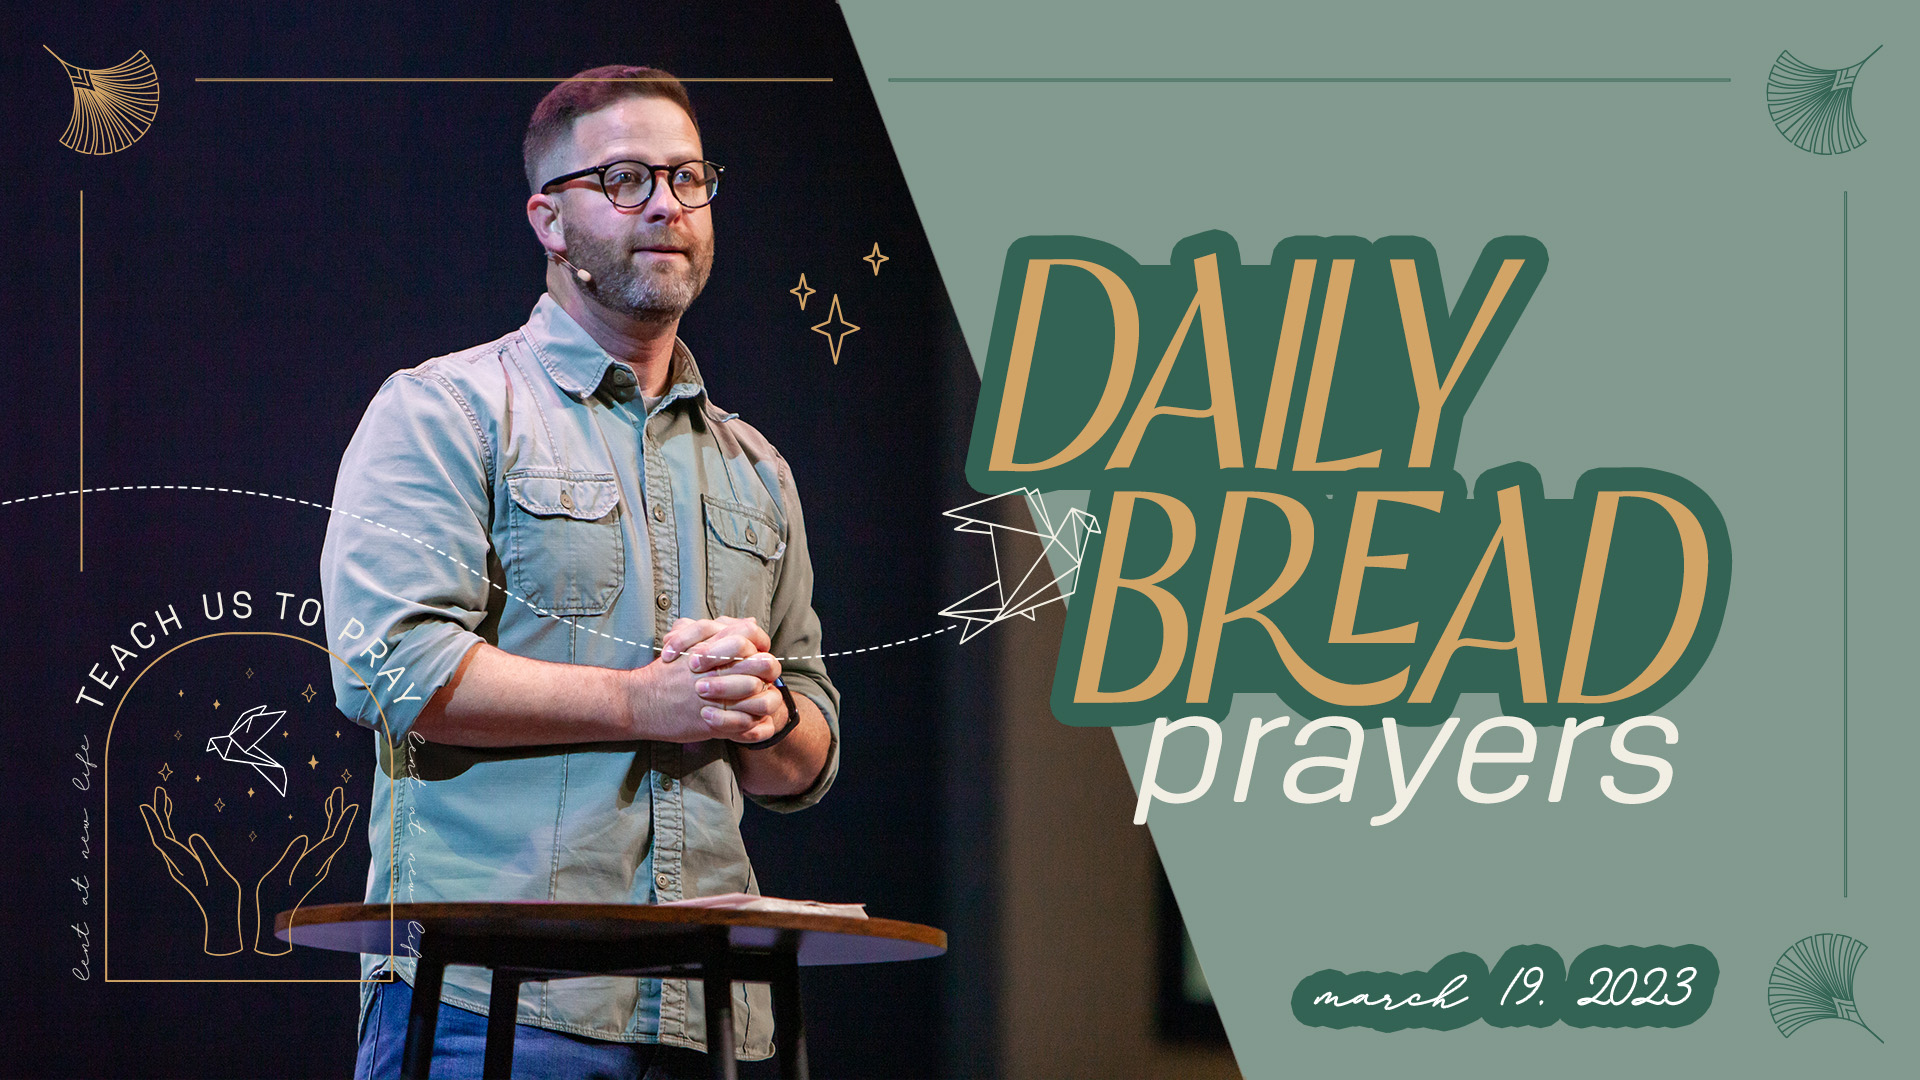 Daily Bread Prayers